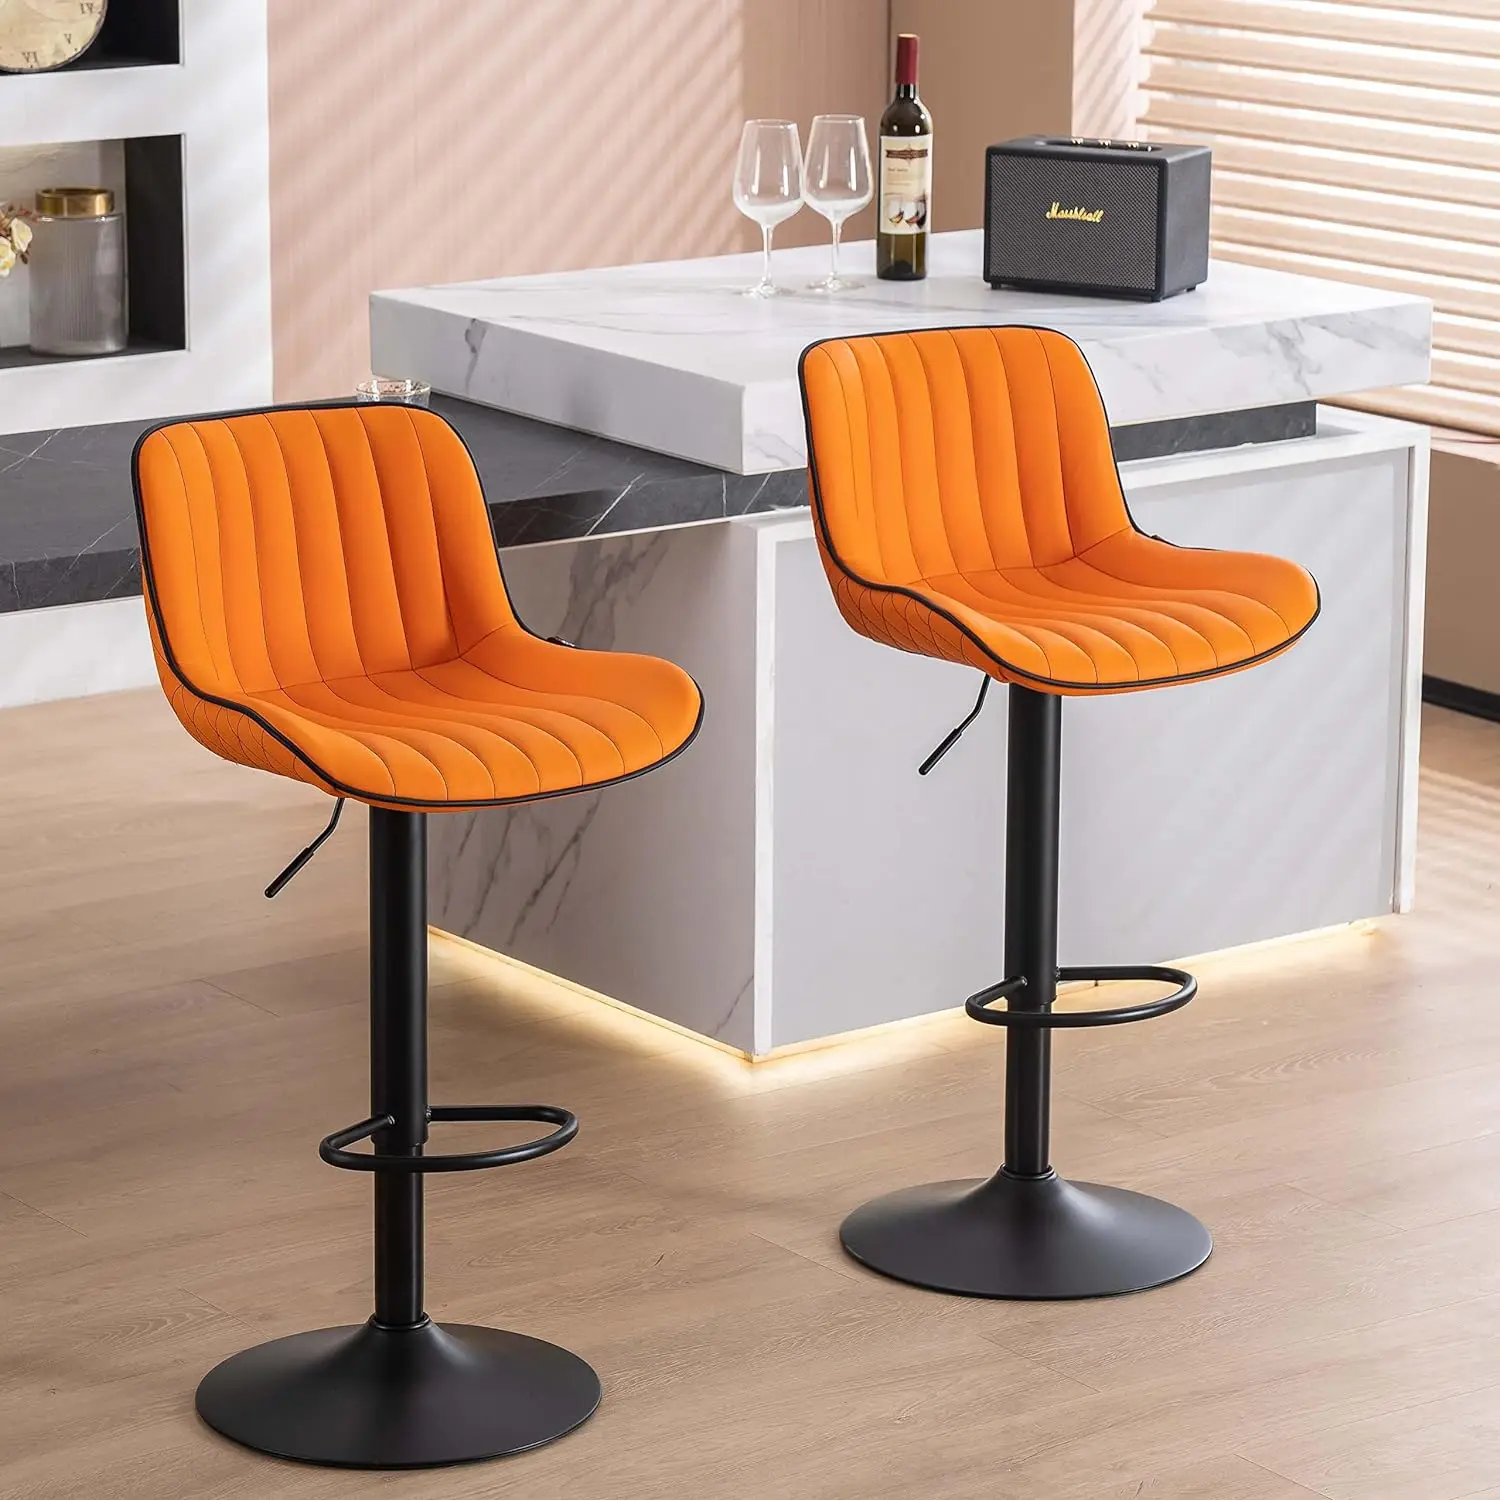 

YOUNUOKE Orange Upholstered Bar Stools Set of 2 Counter Height Modern Adjustable Swivel Bar Chairs with Backs Mid Century PU